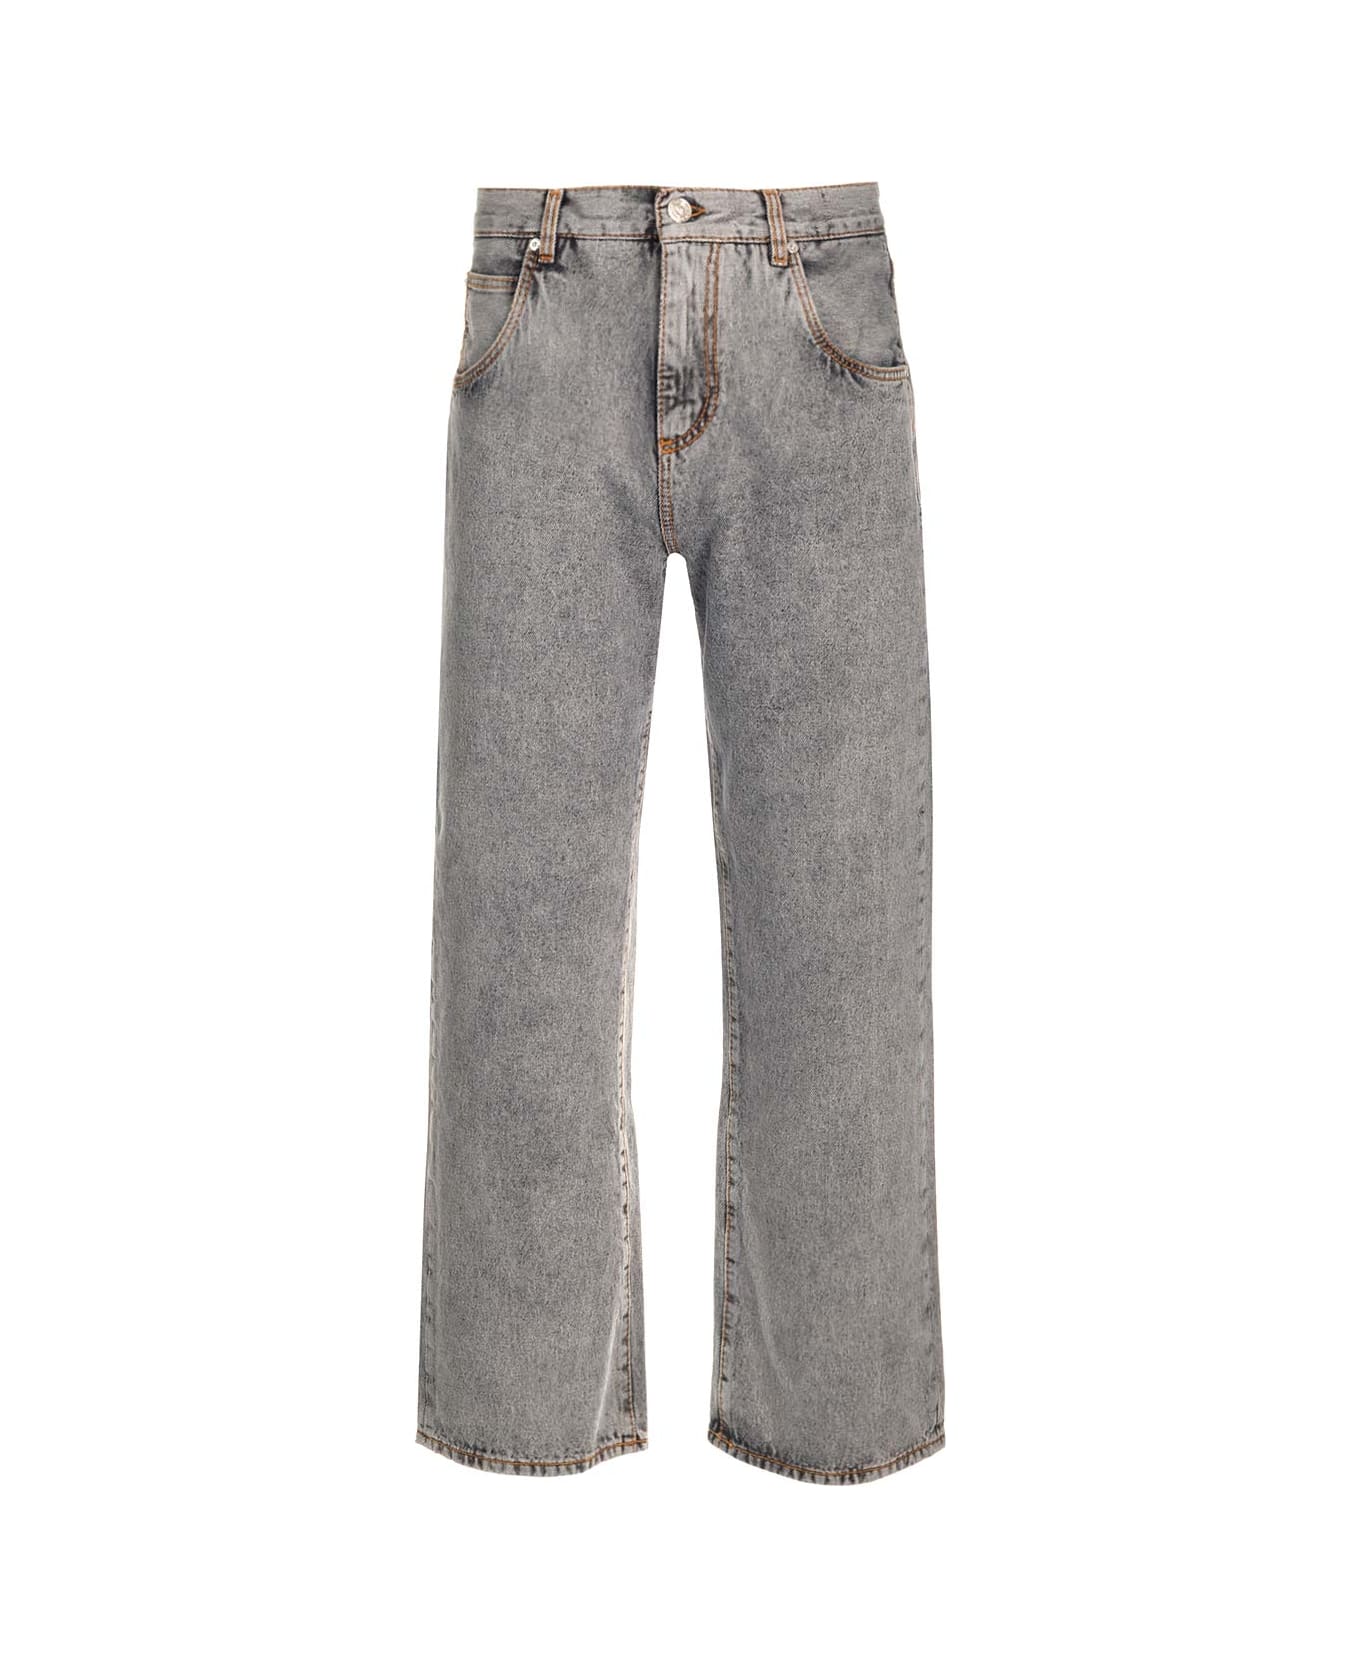 Etro Easy Fit Gray Jeans - Denim